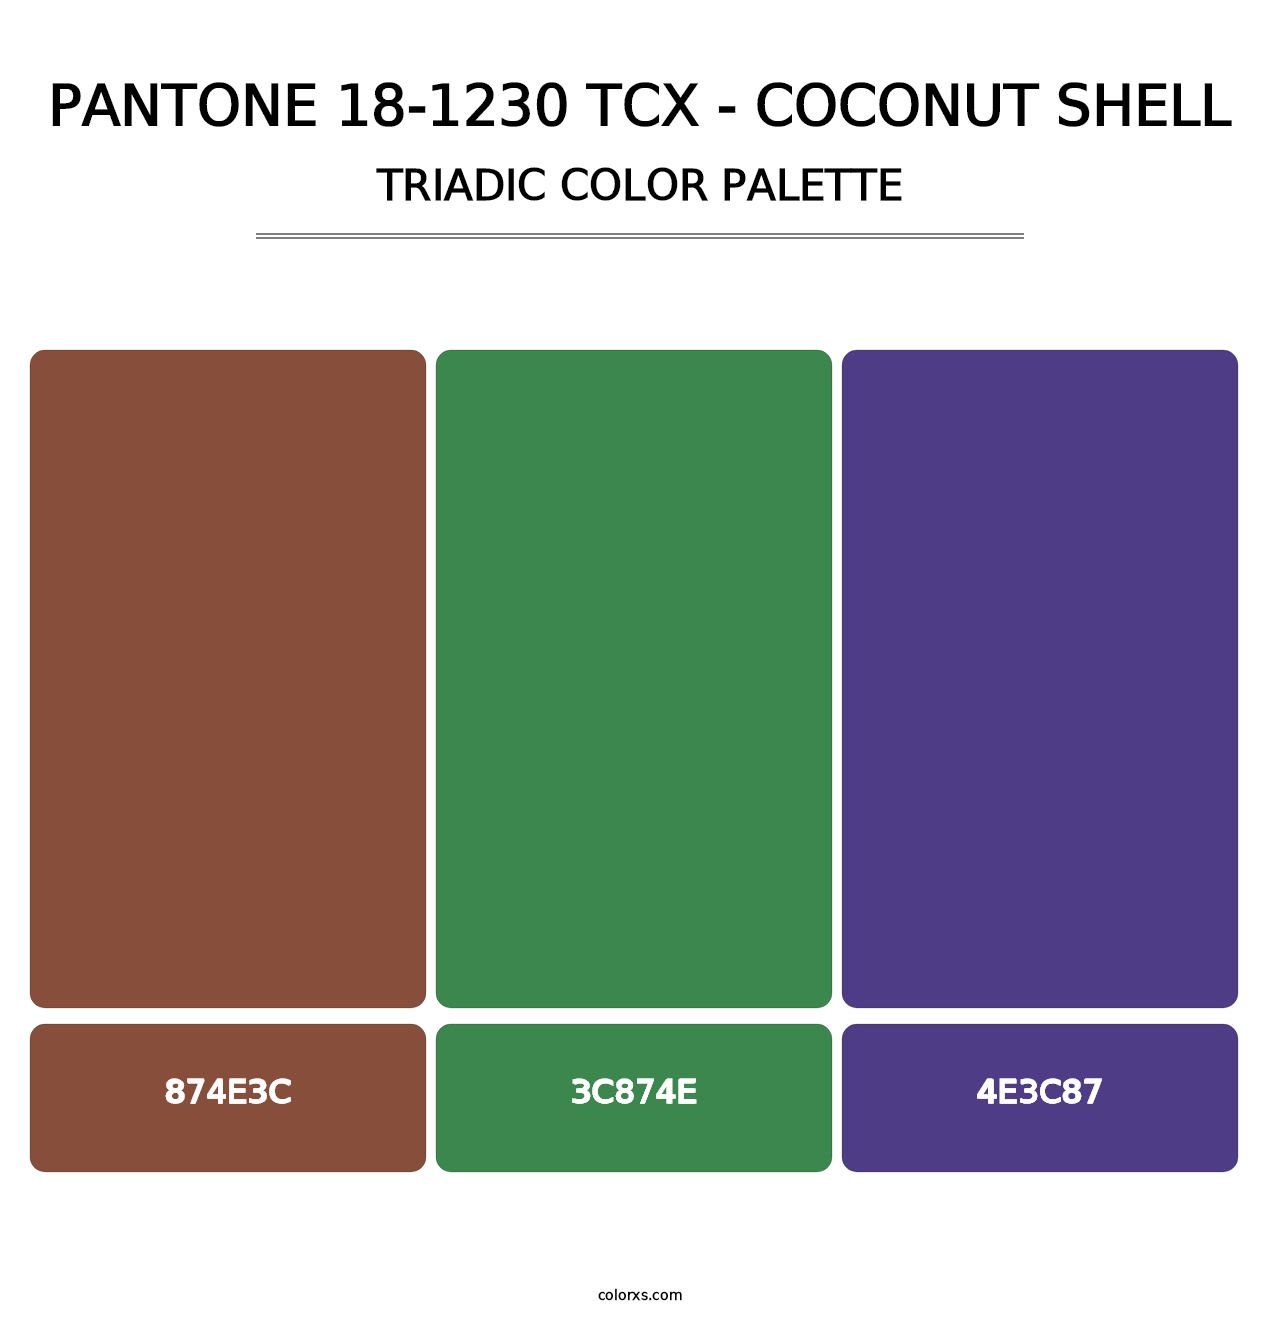 PANTONE 18-1230 TCX - Coconut Shell - Triadic Color Palette